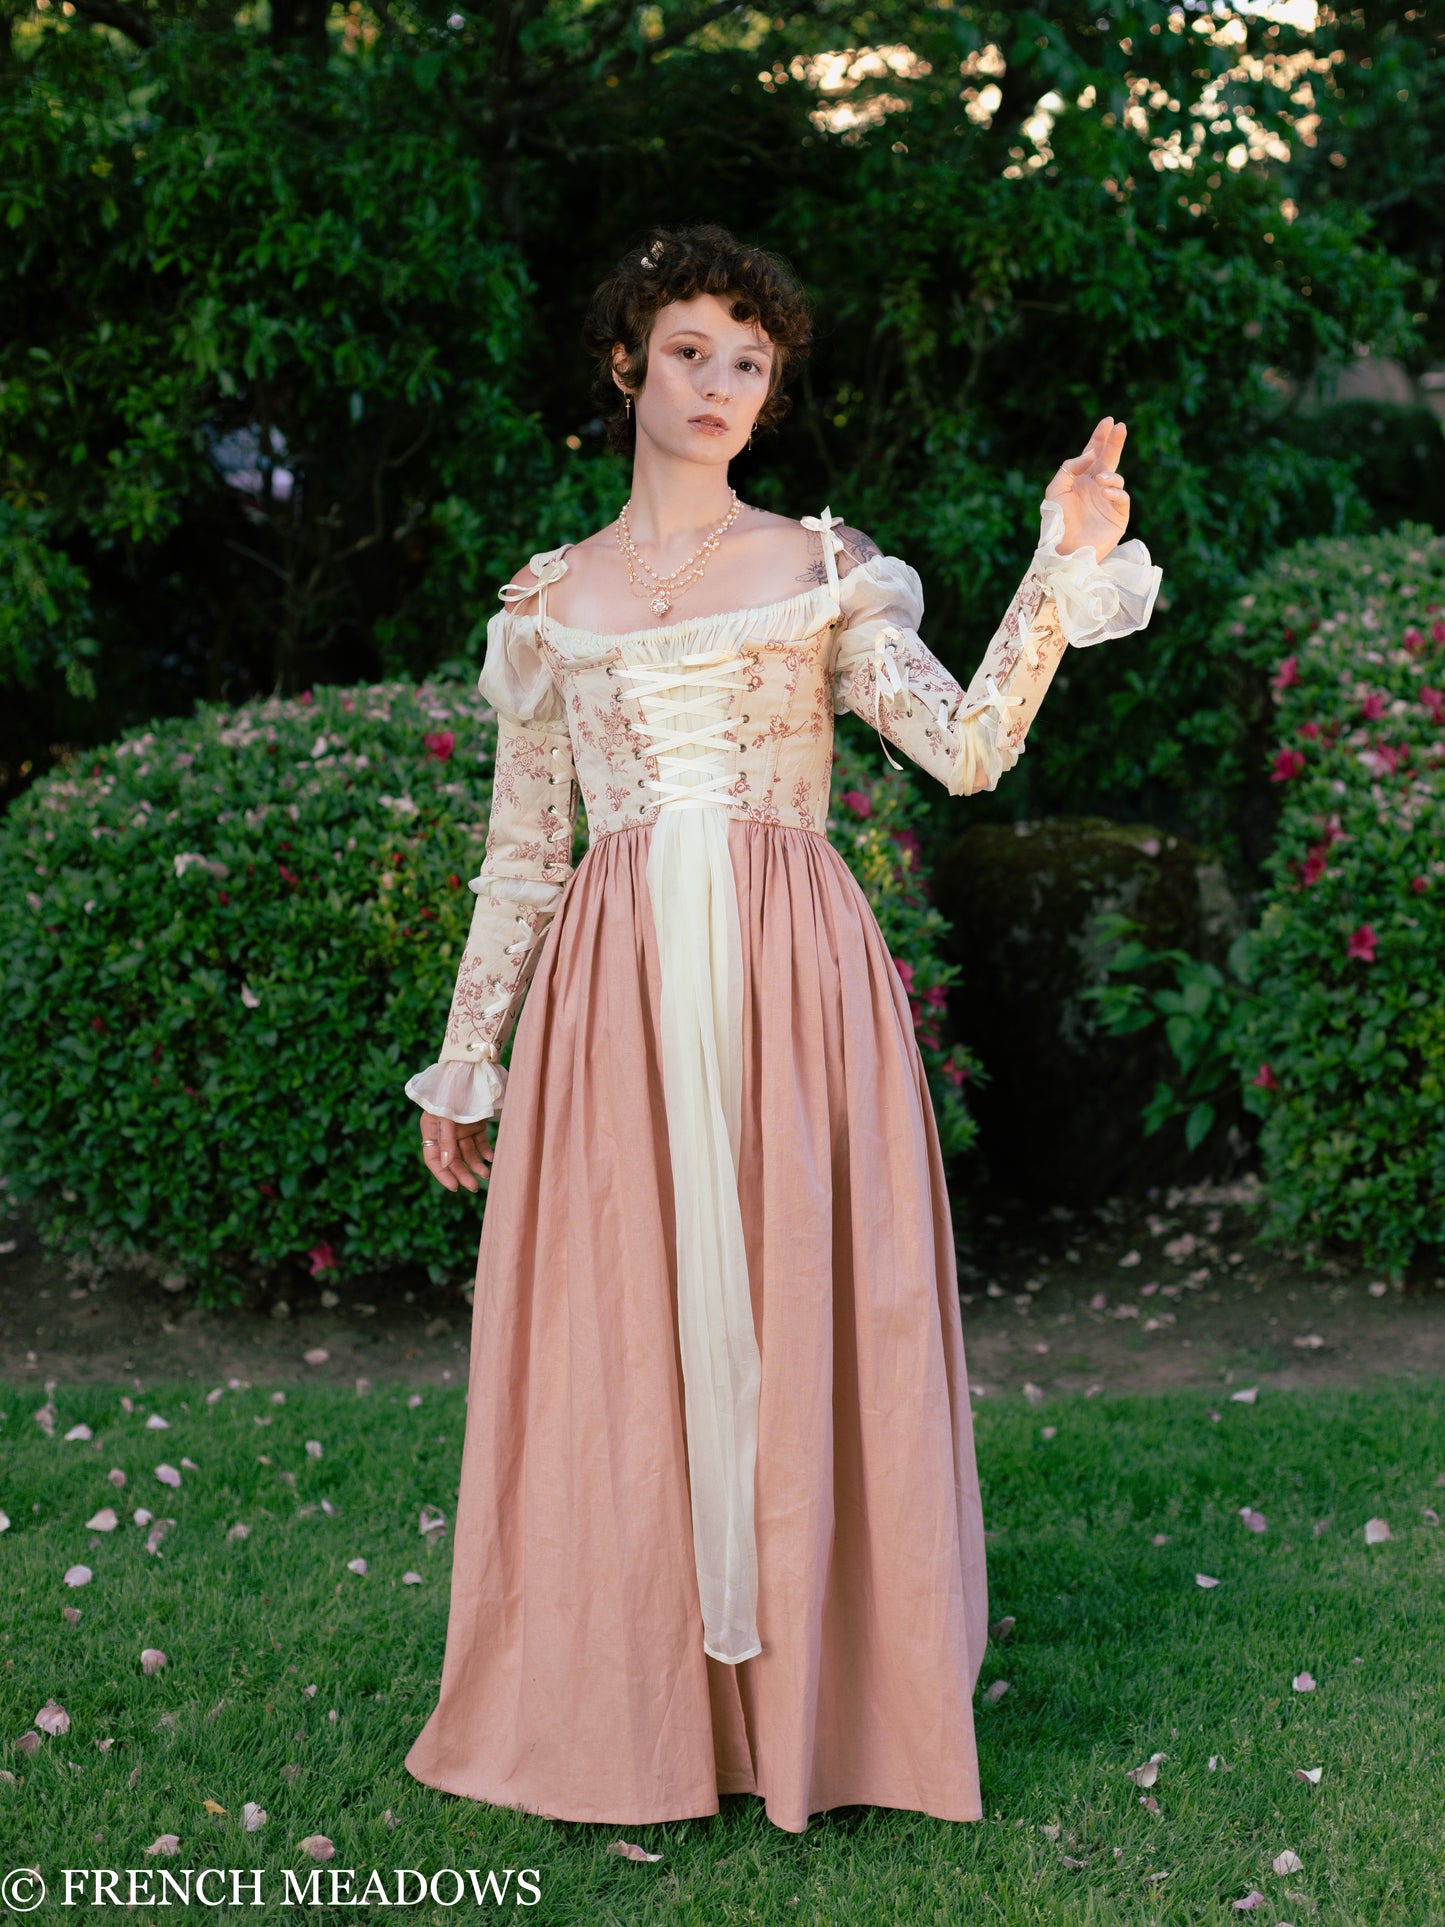 Medieval princess underbust corset set price (corset+slip dress